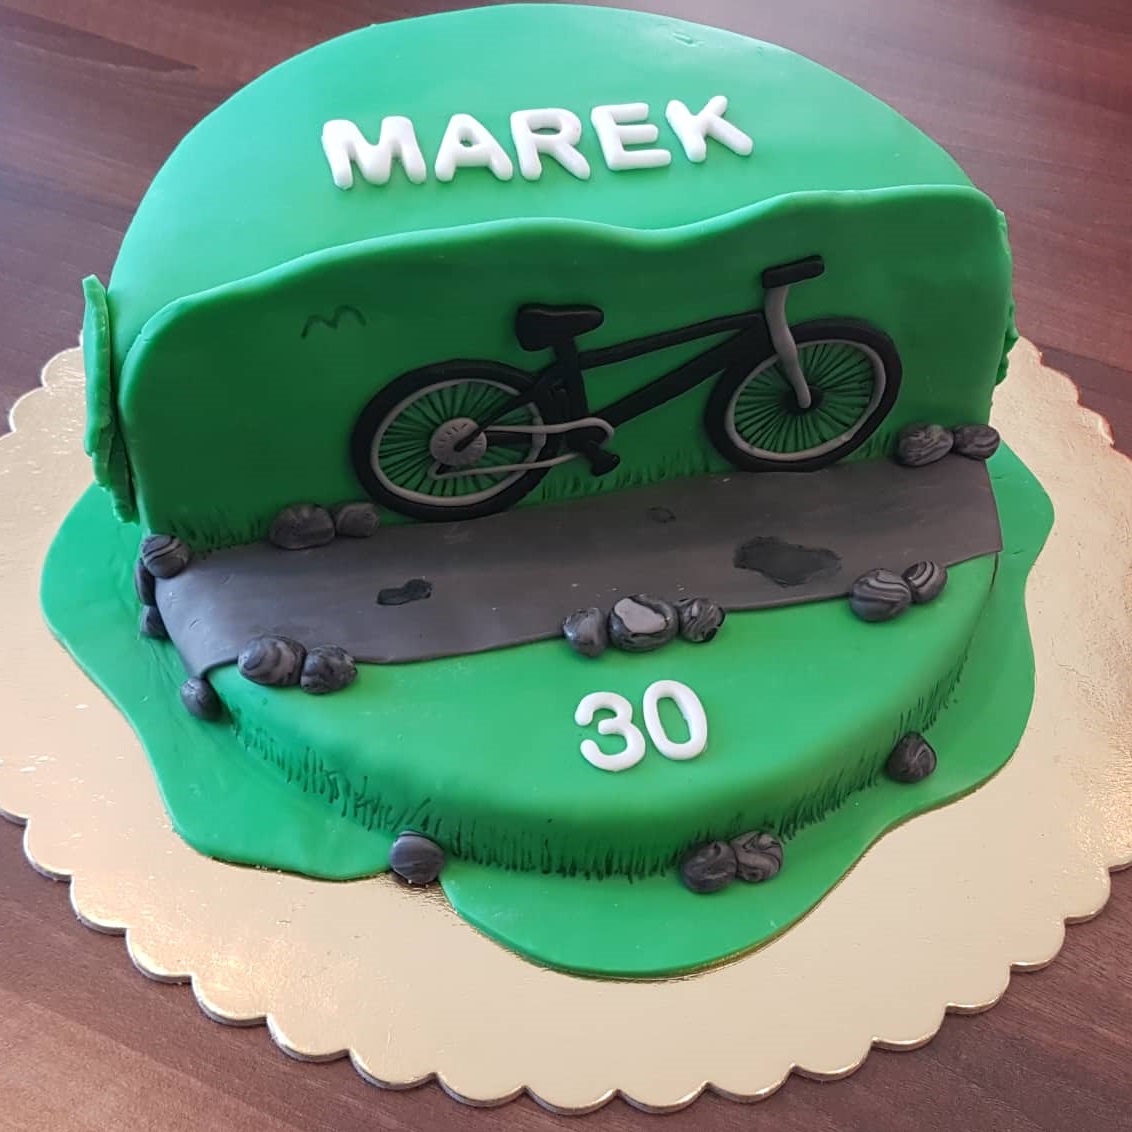 Torta s bicyklom